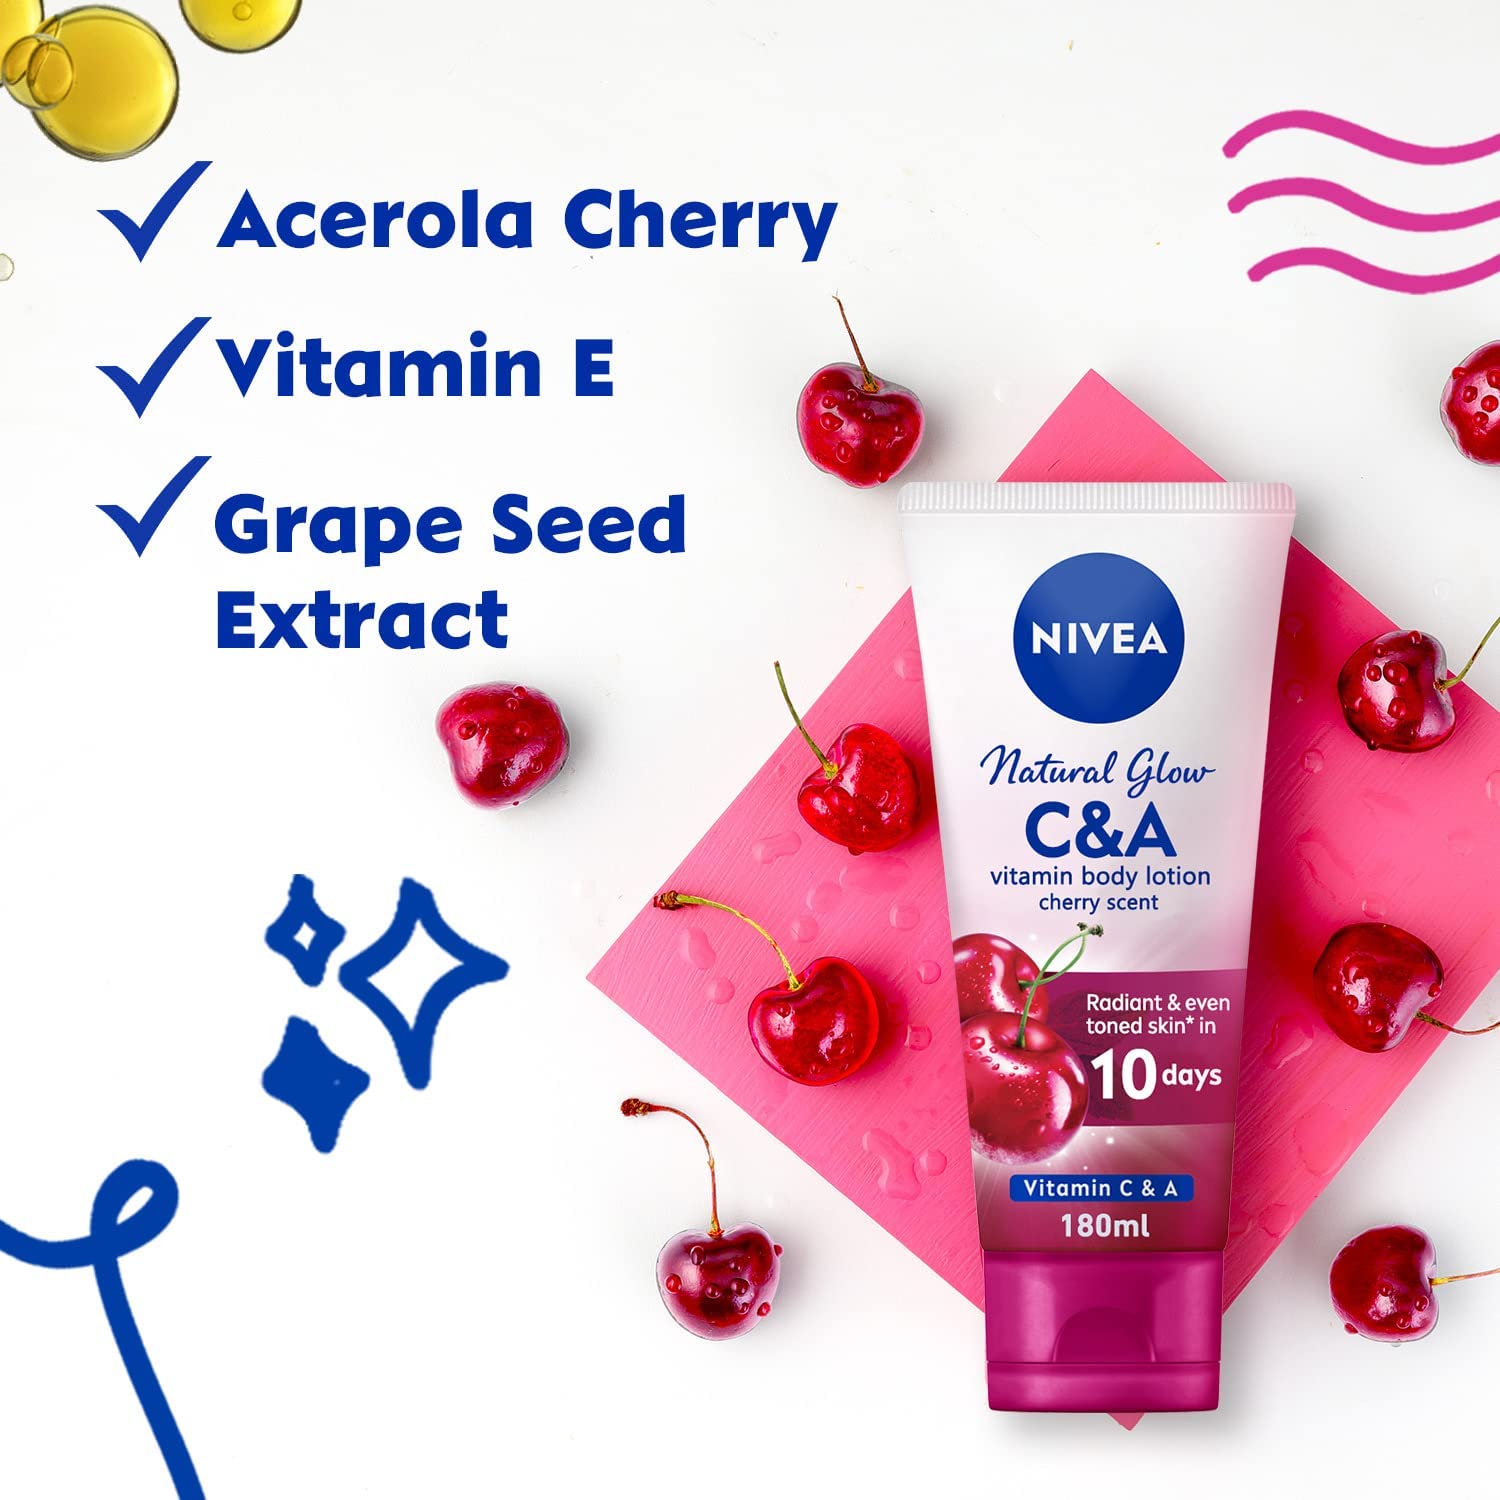 NIVEA Natural Glow Vitamin C And A Cherry Scented Body Lotion White 180ml - E11 Store